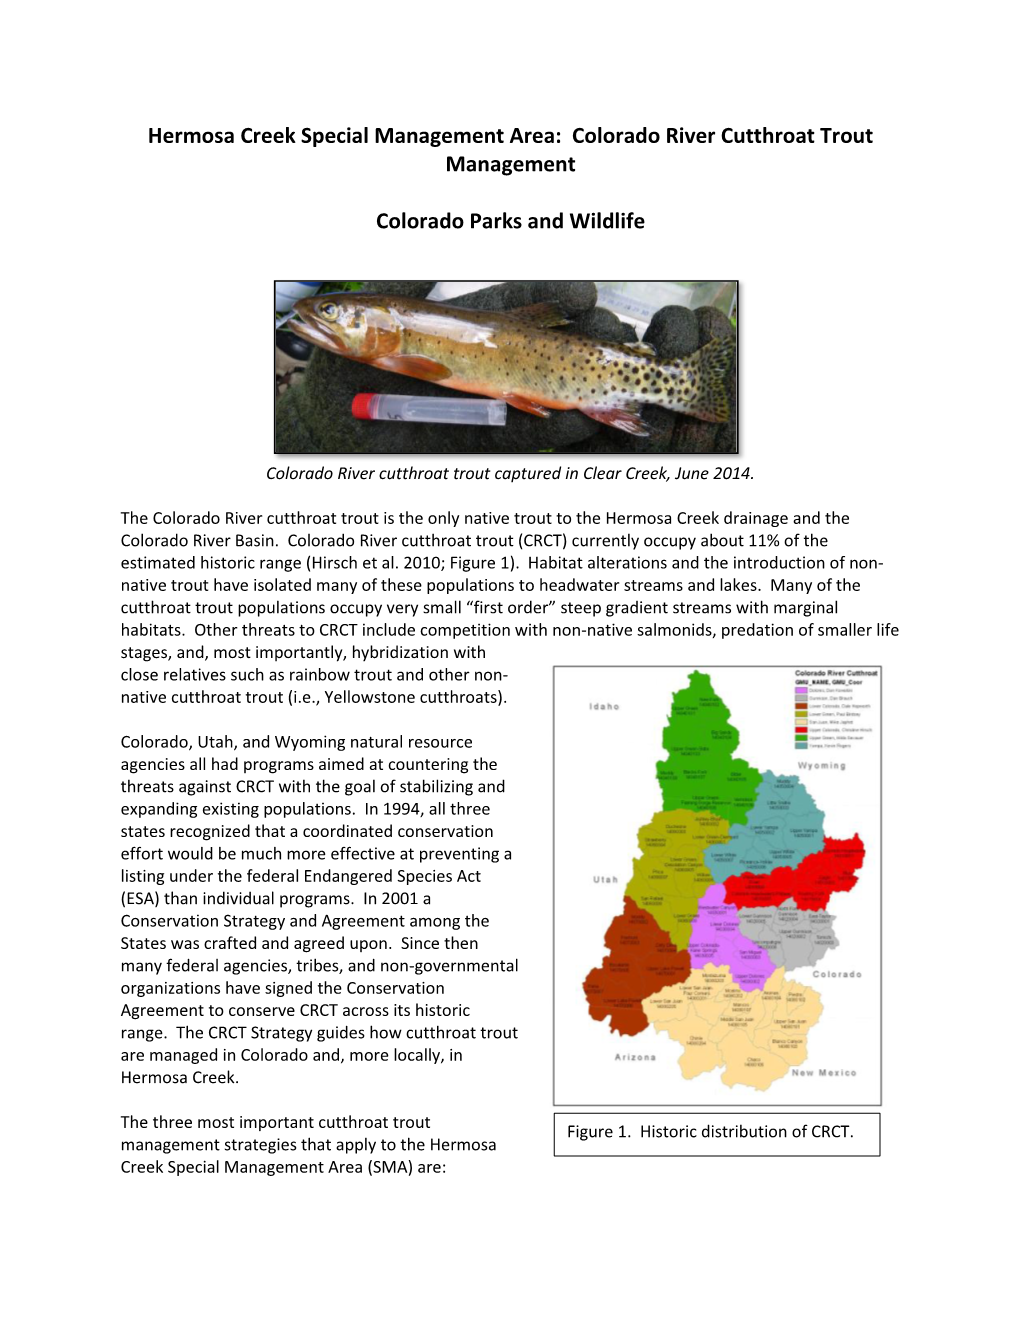 Hermosa Creek Special Management Area: Colorado River Cutthroat Trout Management